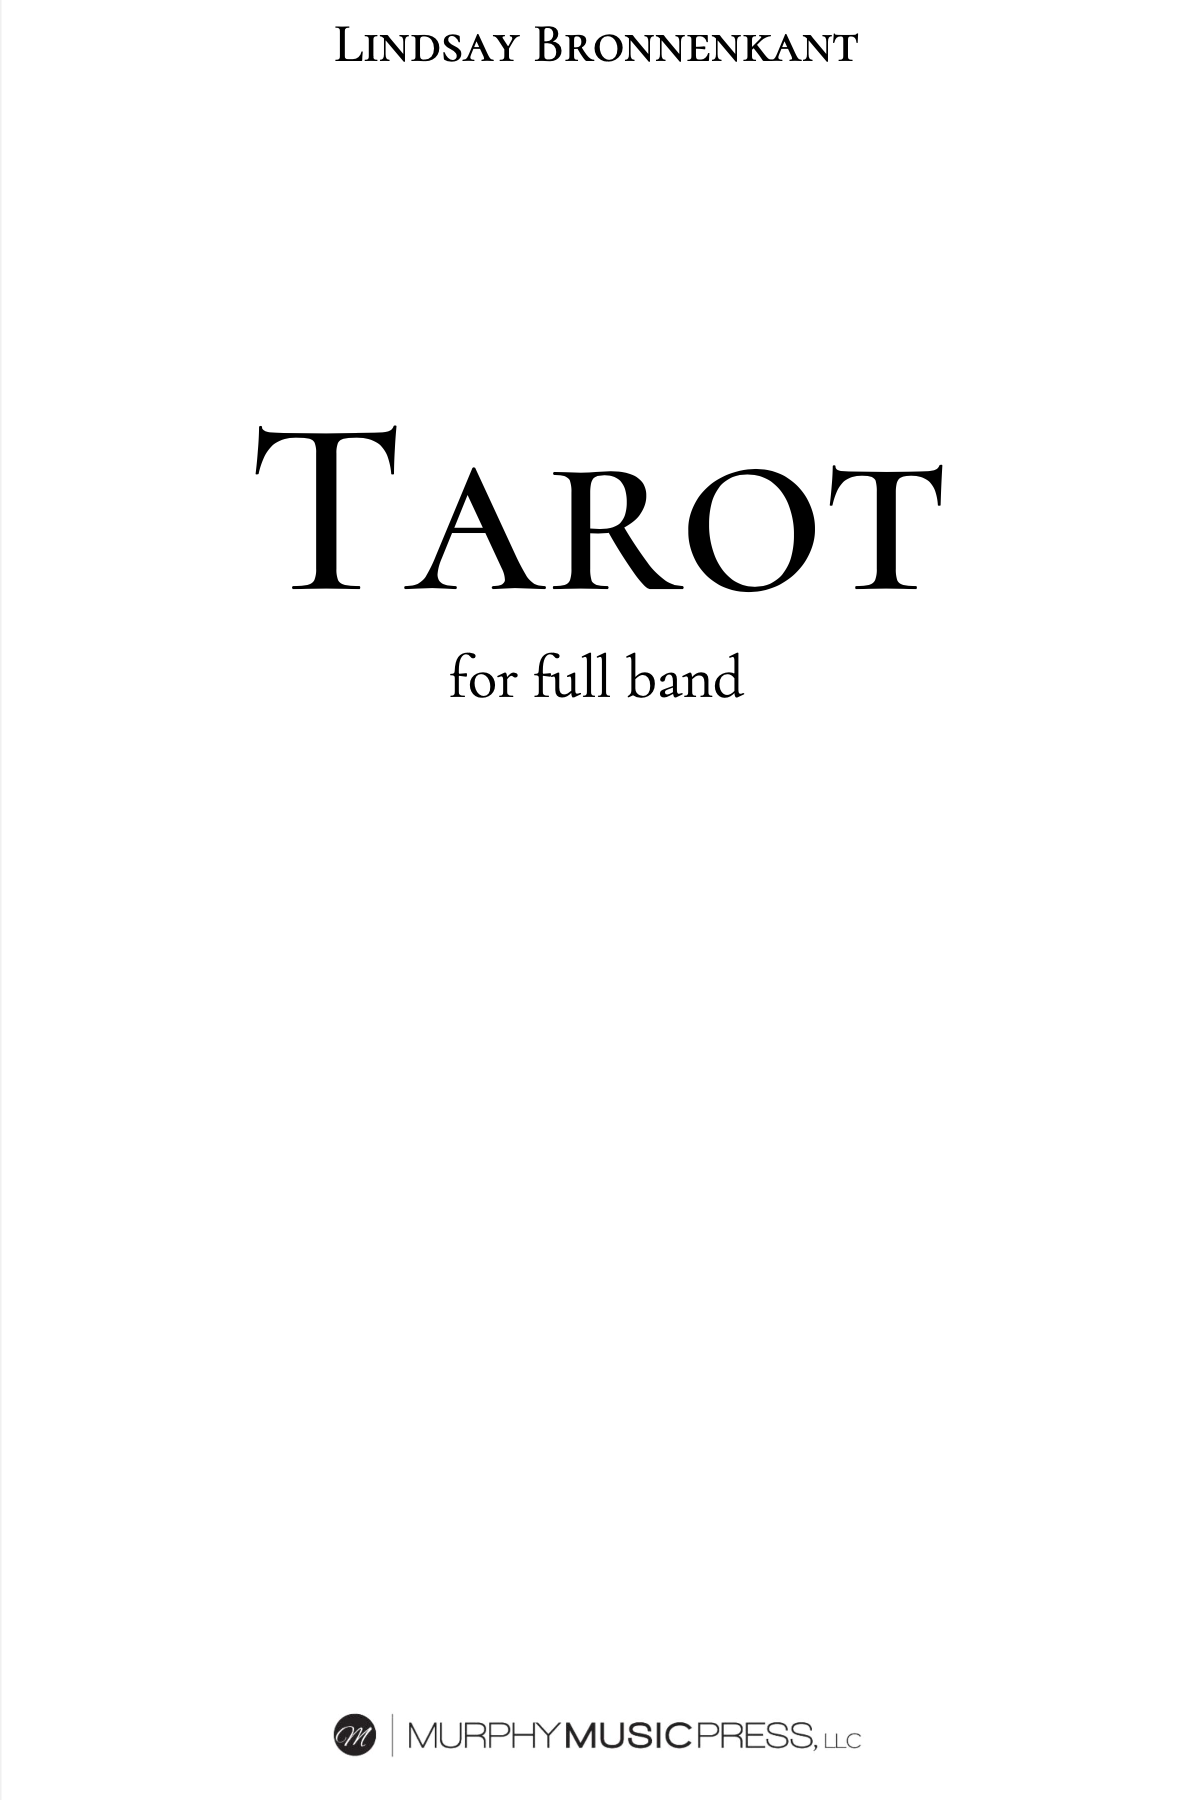 Tarot (Full Band Version) by Lindsay Bronnenkant